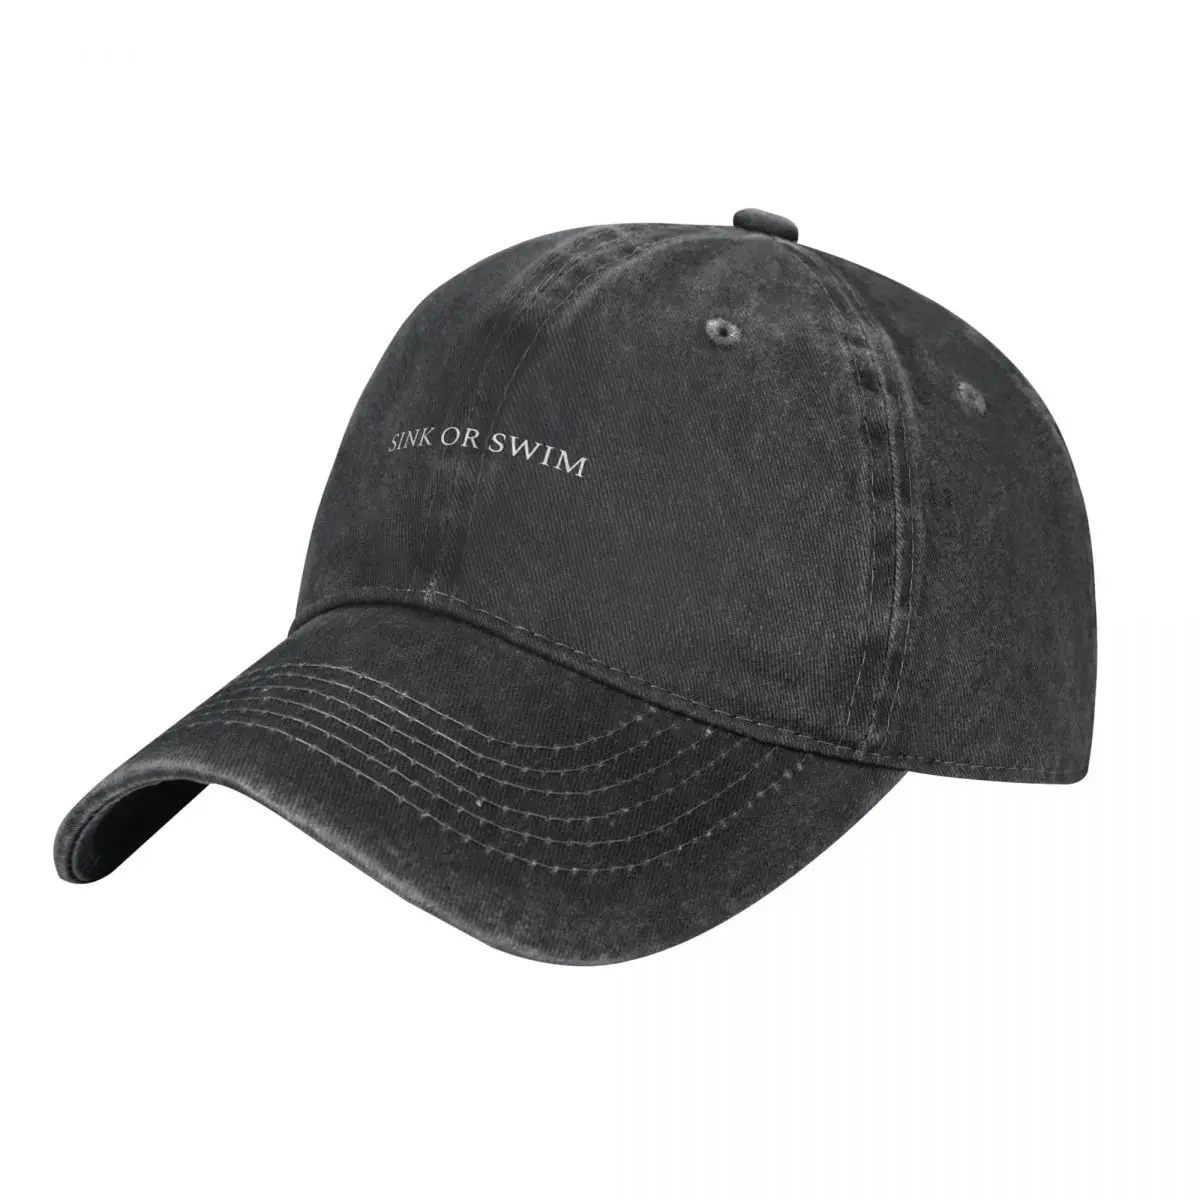 

Sink Or Swim - Design Cowboy Hat Sports Cap New Hat Wild Ball Hat New In Men Women's